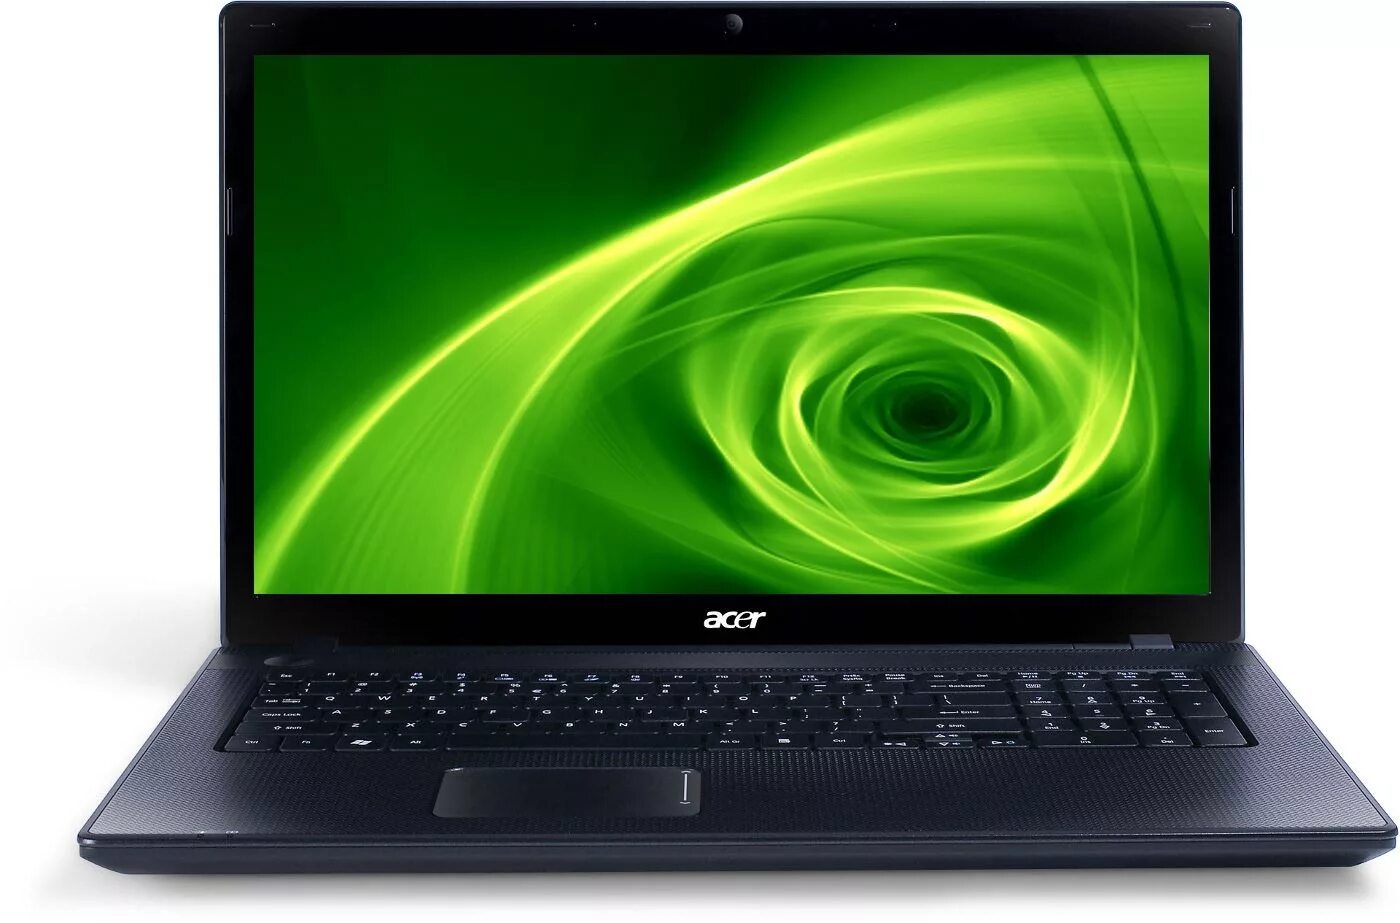 Acer 7739zg. Ноутбук Асер 7739. Acer Aspire e1-570g. Ноутбук Acer Aspire 2. Acer okr010